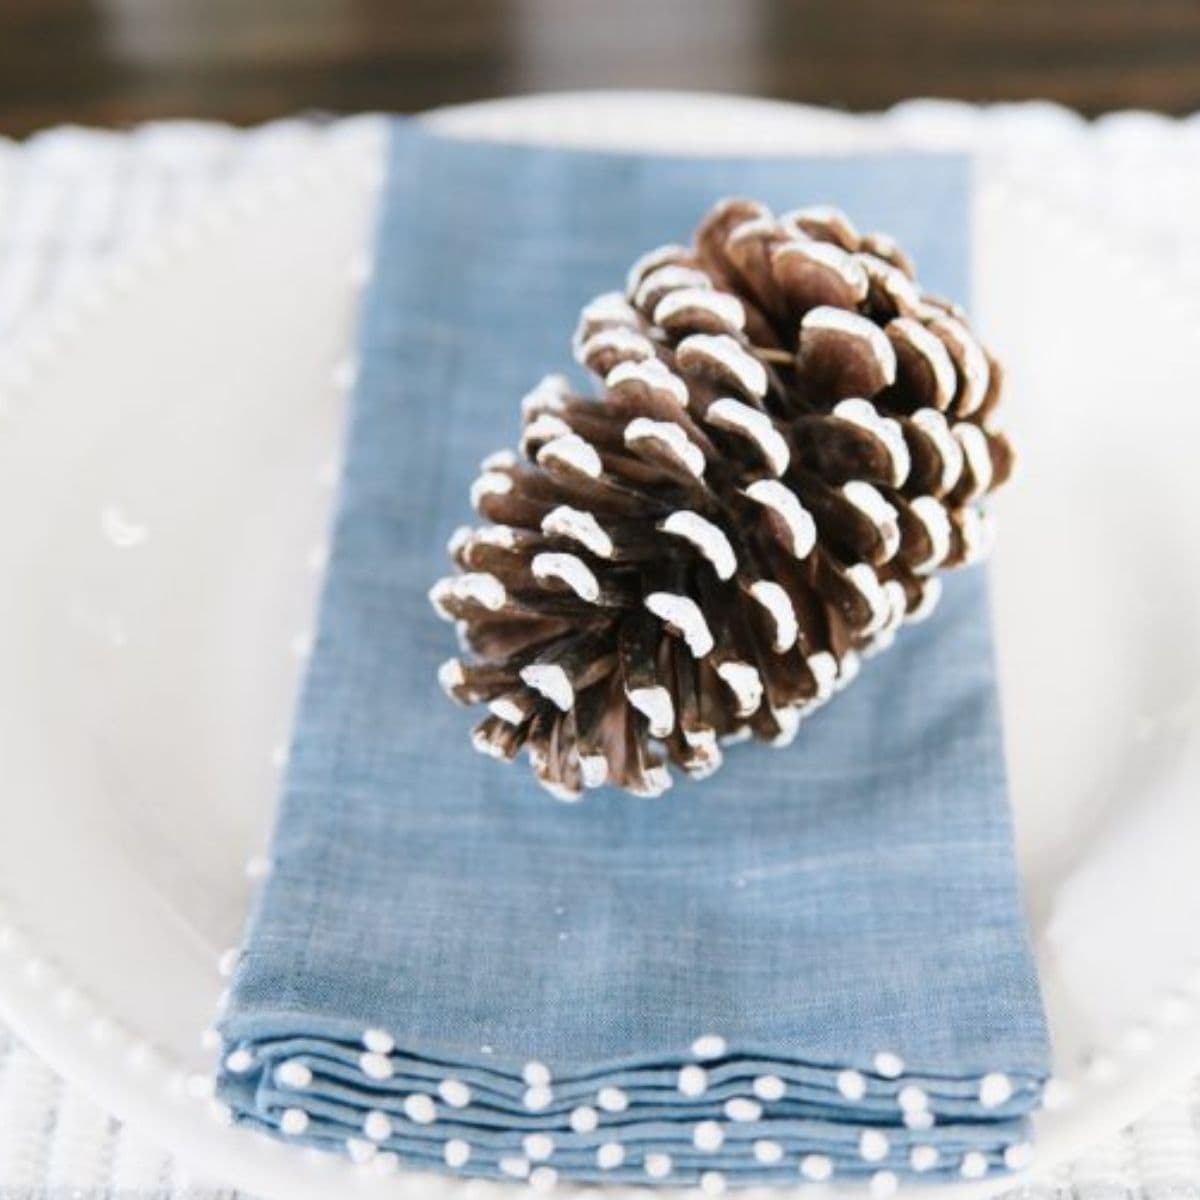 pinecone on a blue napkin